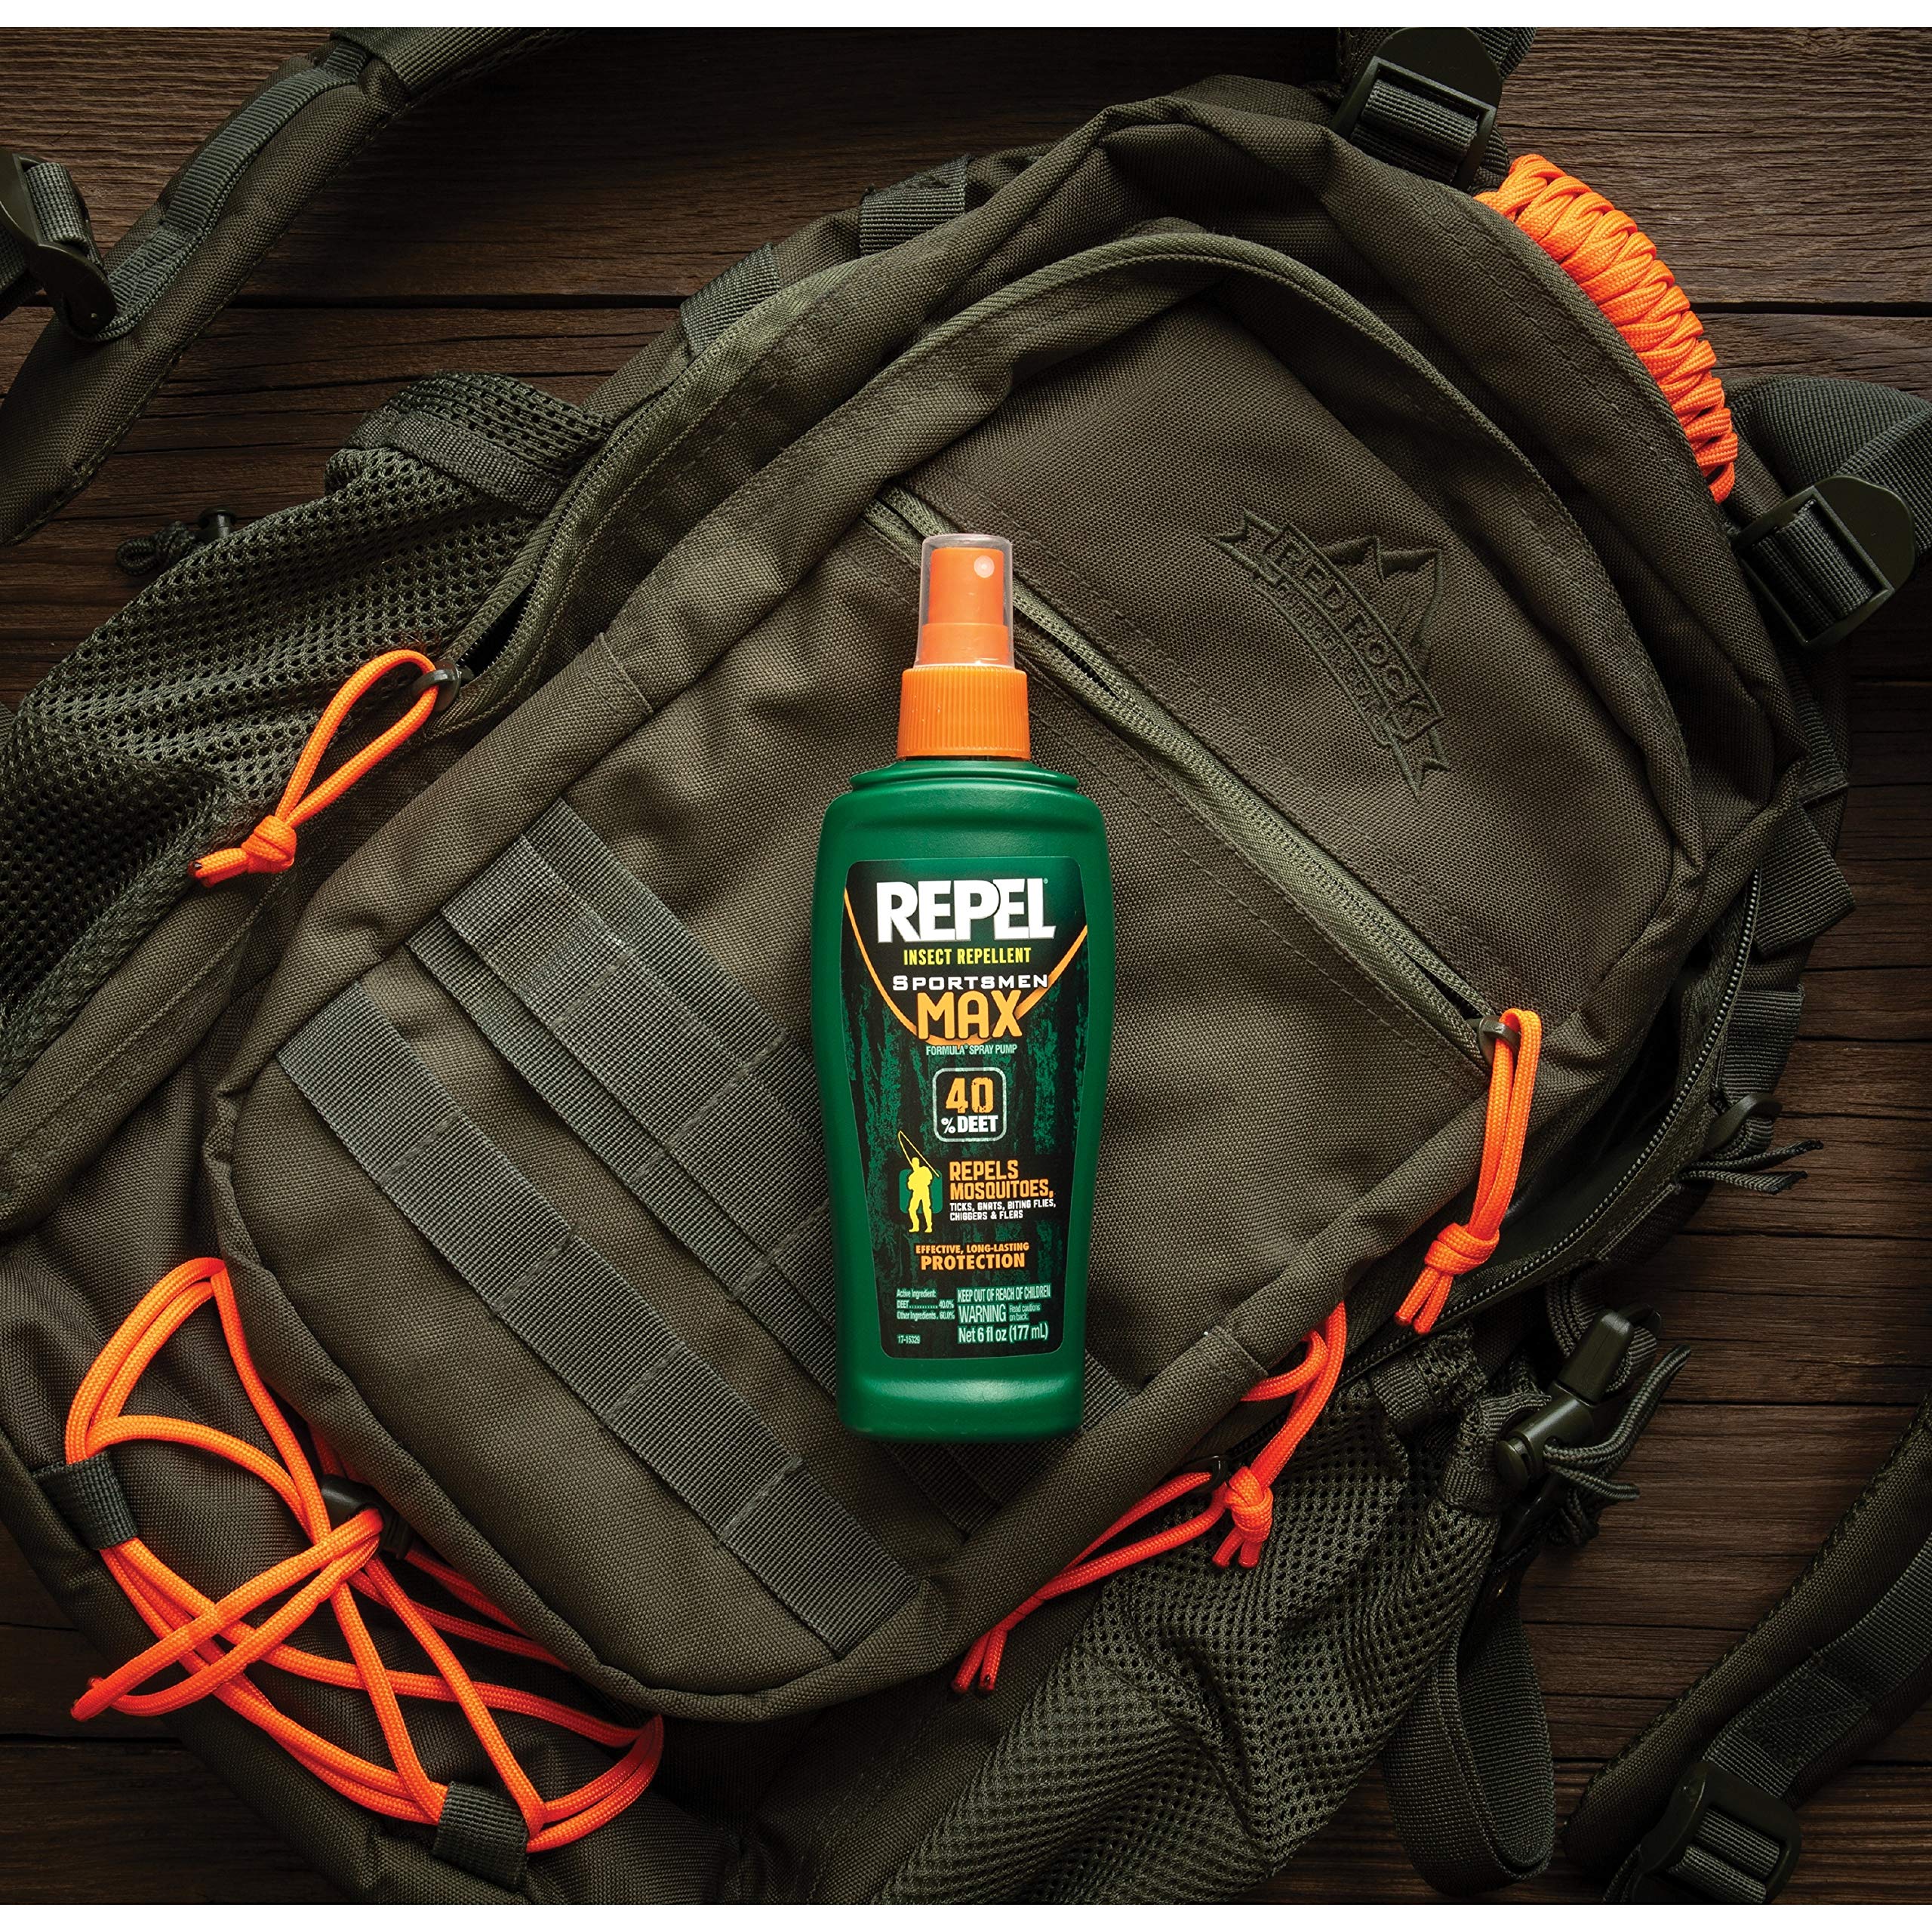 Repel Insect Repellent Sportsman Max Formula, Repels Mosquitoes, Ticks and Gnats, Effective Long-Lasting Protection, 40% DEET (A